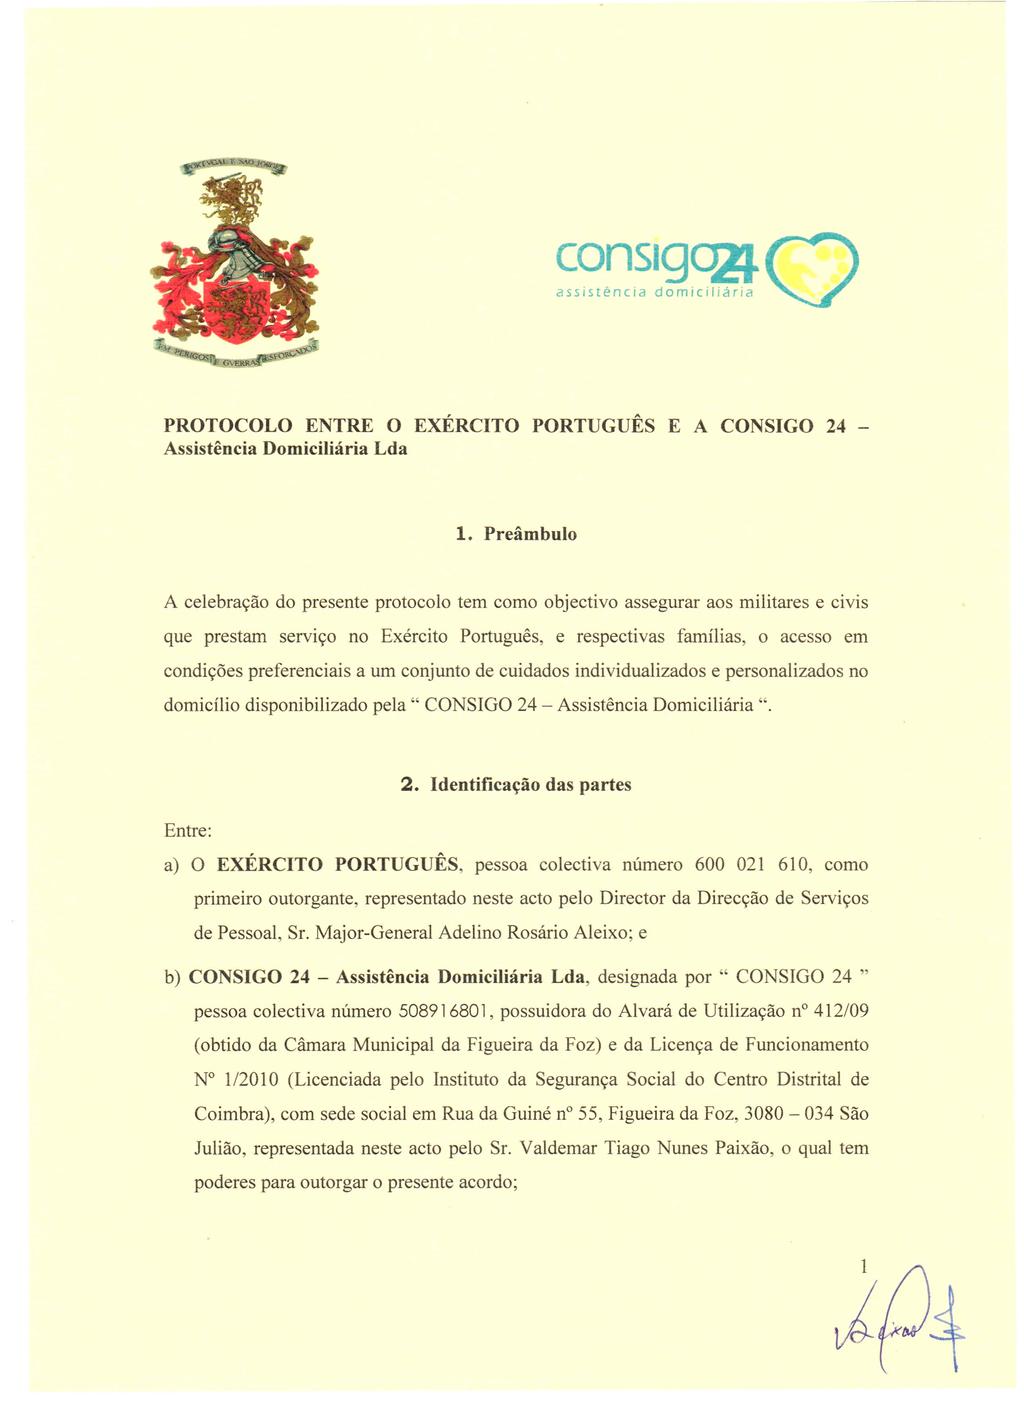 PROTOCOLO ENTRE 0 ExERCITO PORTUGUES E A CONSIGO 24 - Assistencia Domiciliaria Lda 1.